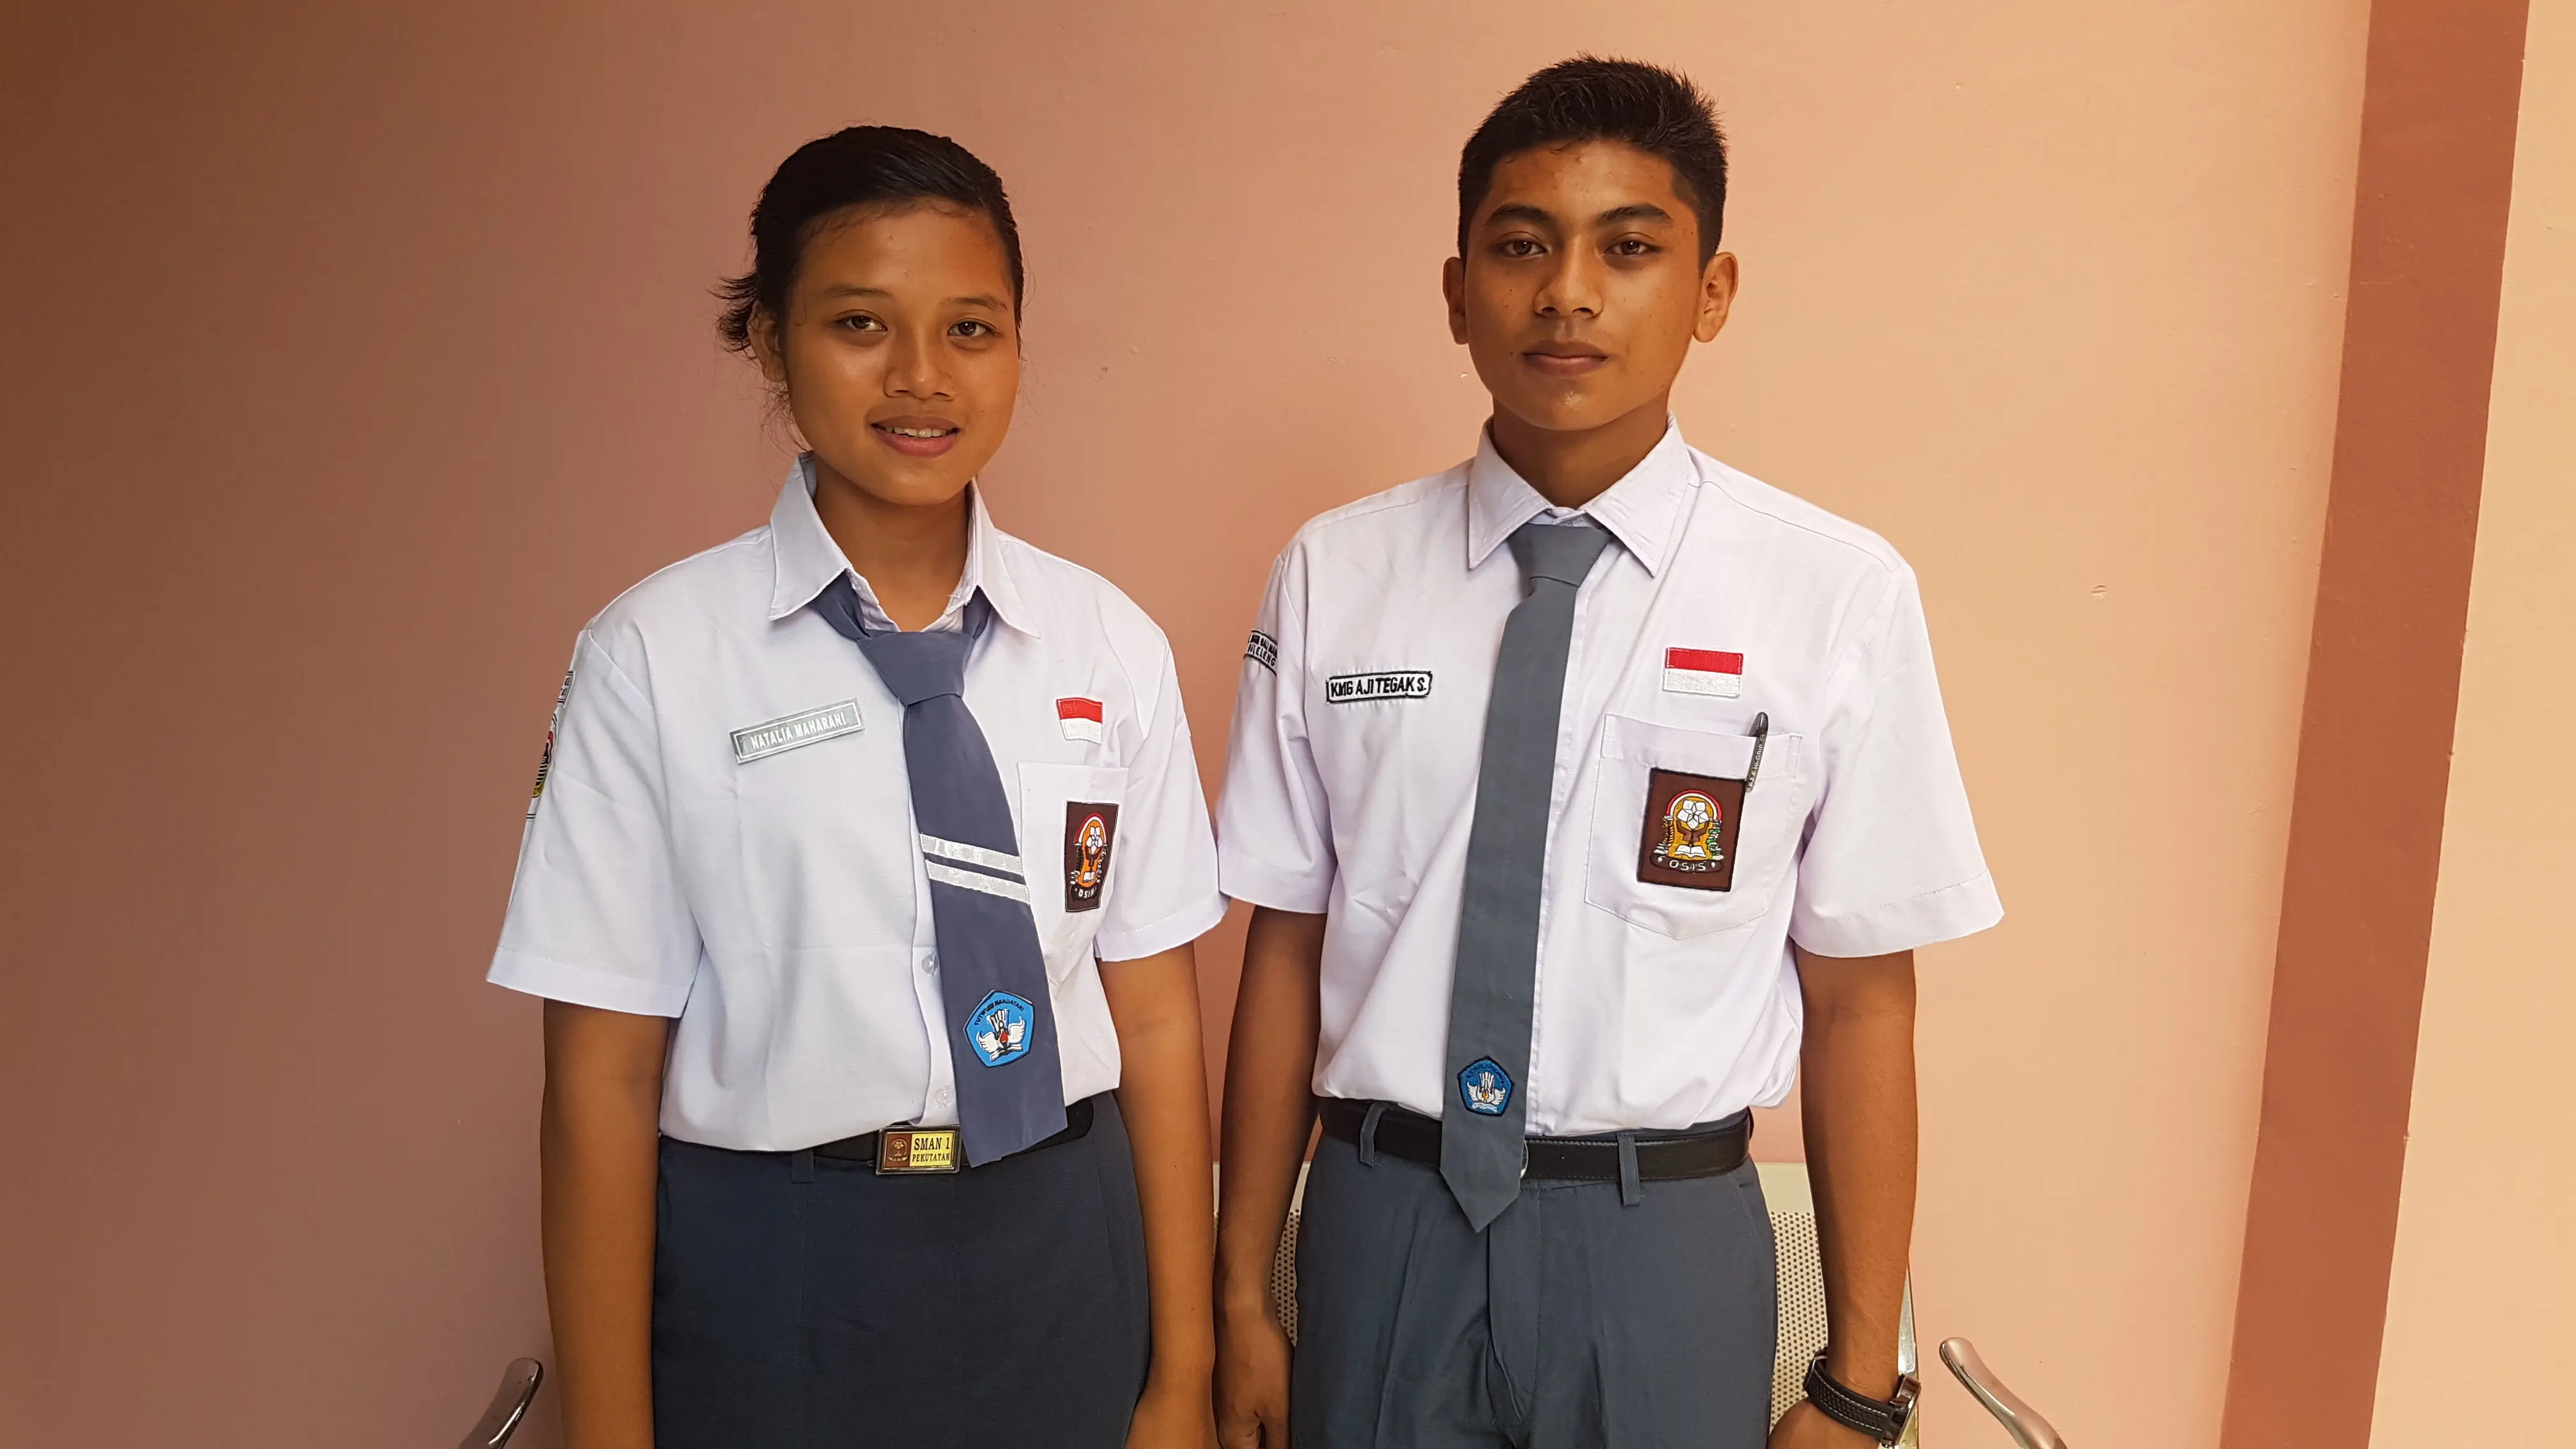 Pasangan Paskibraka perwakilan Bali I Komang Aji Tegak Sidiman dan Ni Kadek Natalia Maharani. (Liputan6.com/Aditya Eka Prawira)